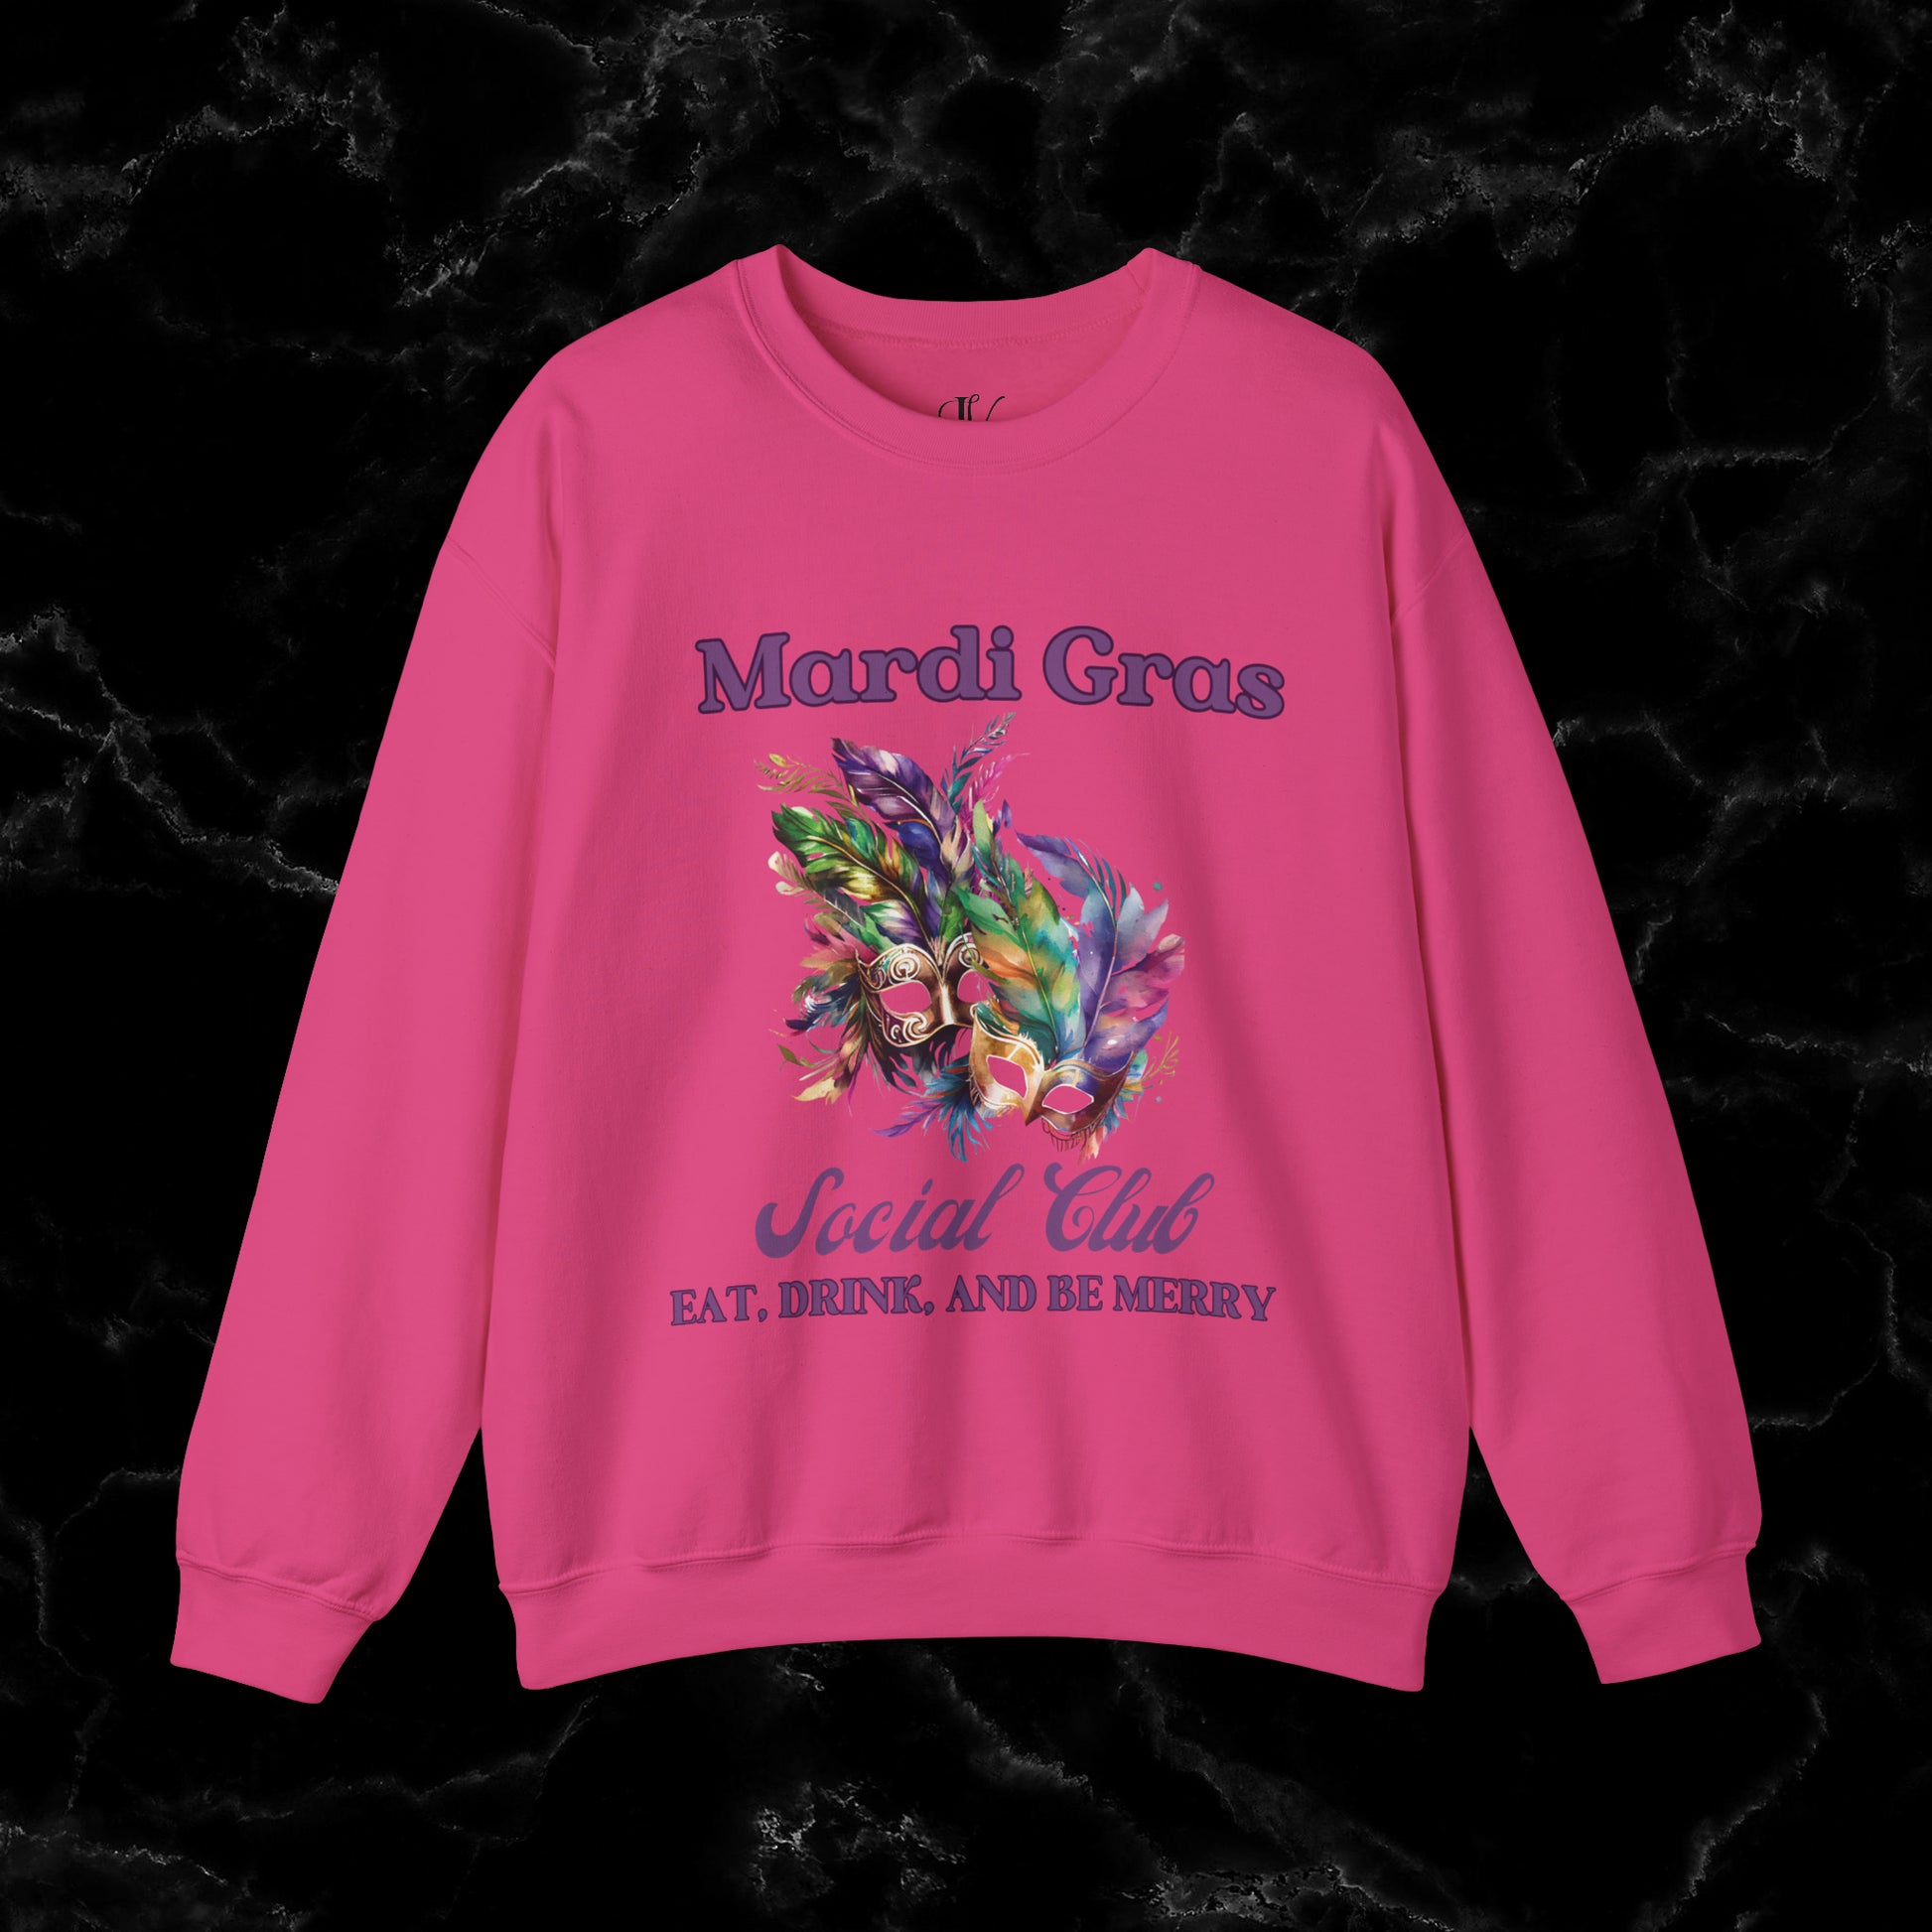 Mardi Gras Sweatshirt Women - NOLA Luxury Bachelorette Sweater, Unique Fat Tuesday Shirt, Louisiana Girls Trip Sweater, Mardi Gras Social Club Chic Sweatshirt S Heliconia 